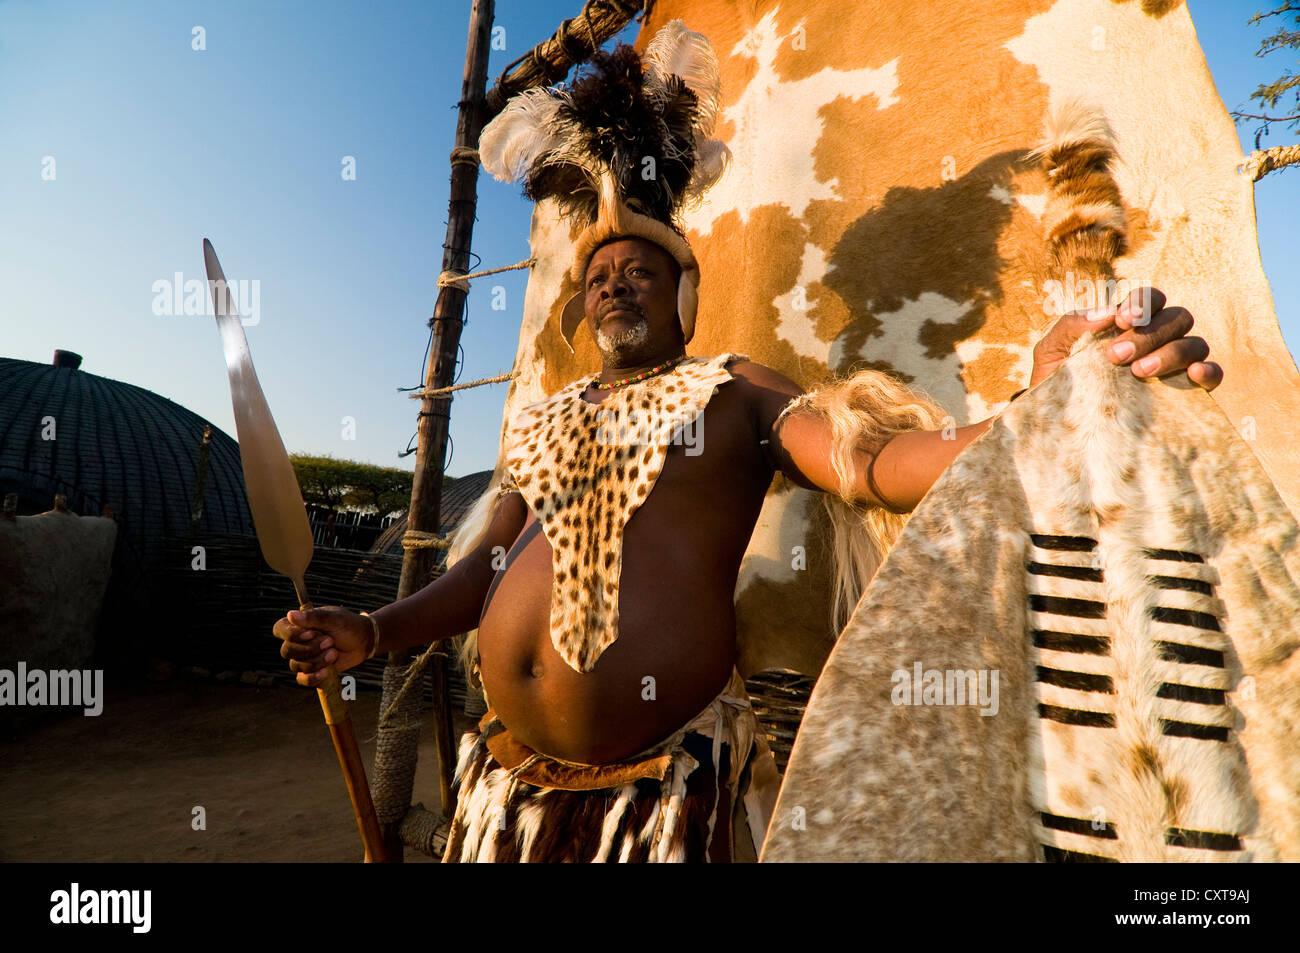 Guerrier zoulou, tournage de Shakazulu, Shakaland, KwaZulu-Natal, Afrique du Sud, l'Afrique Banque D'Images